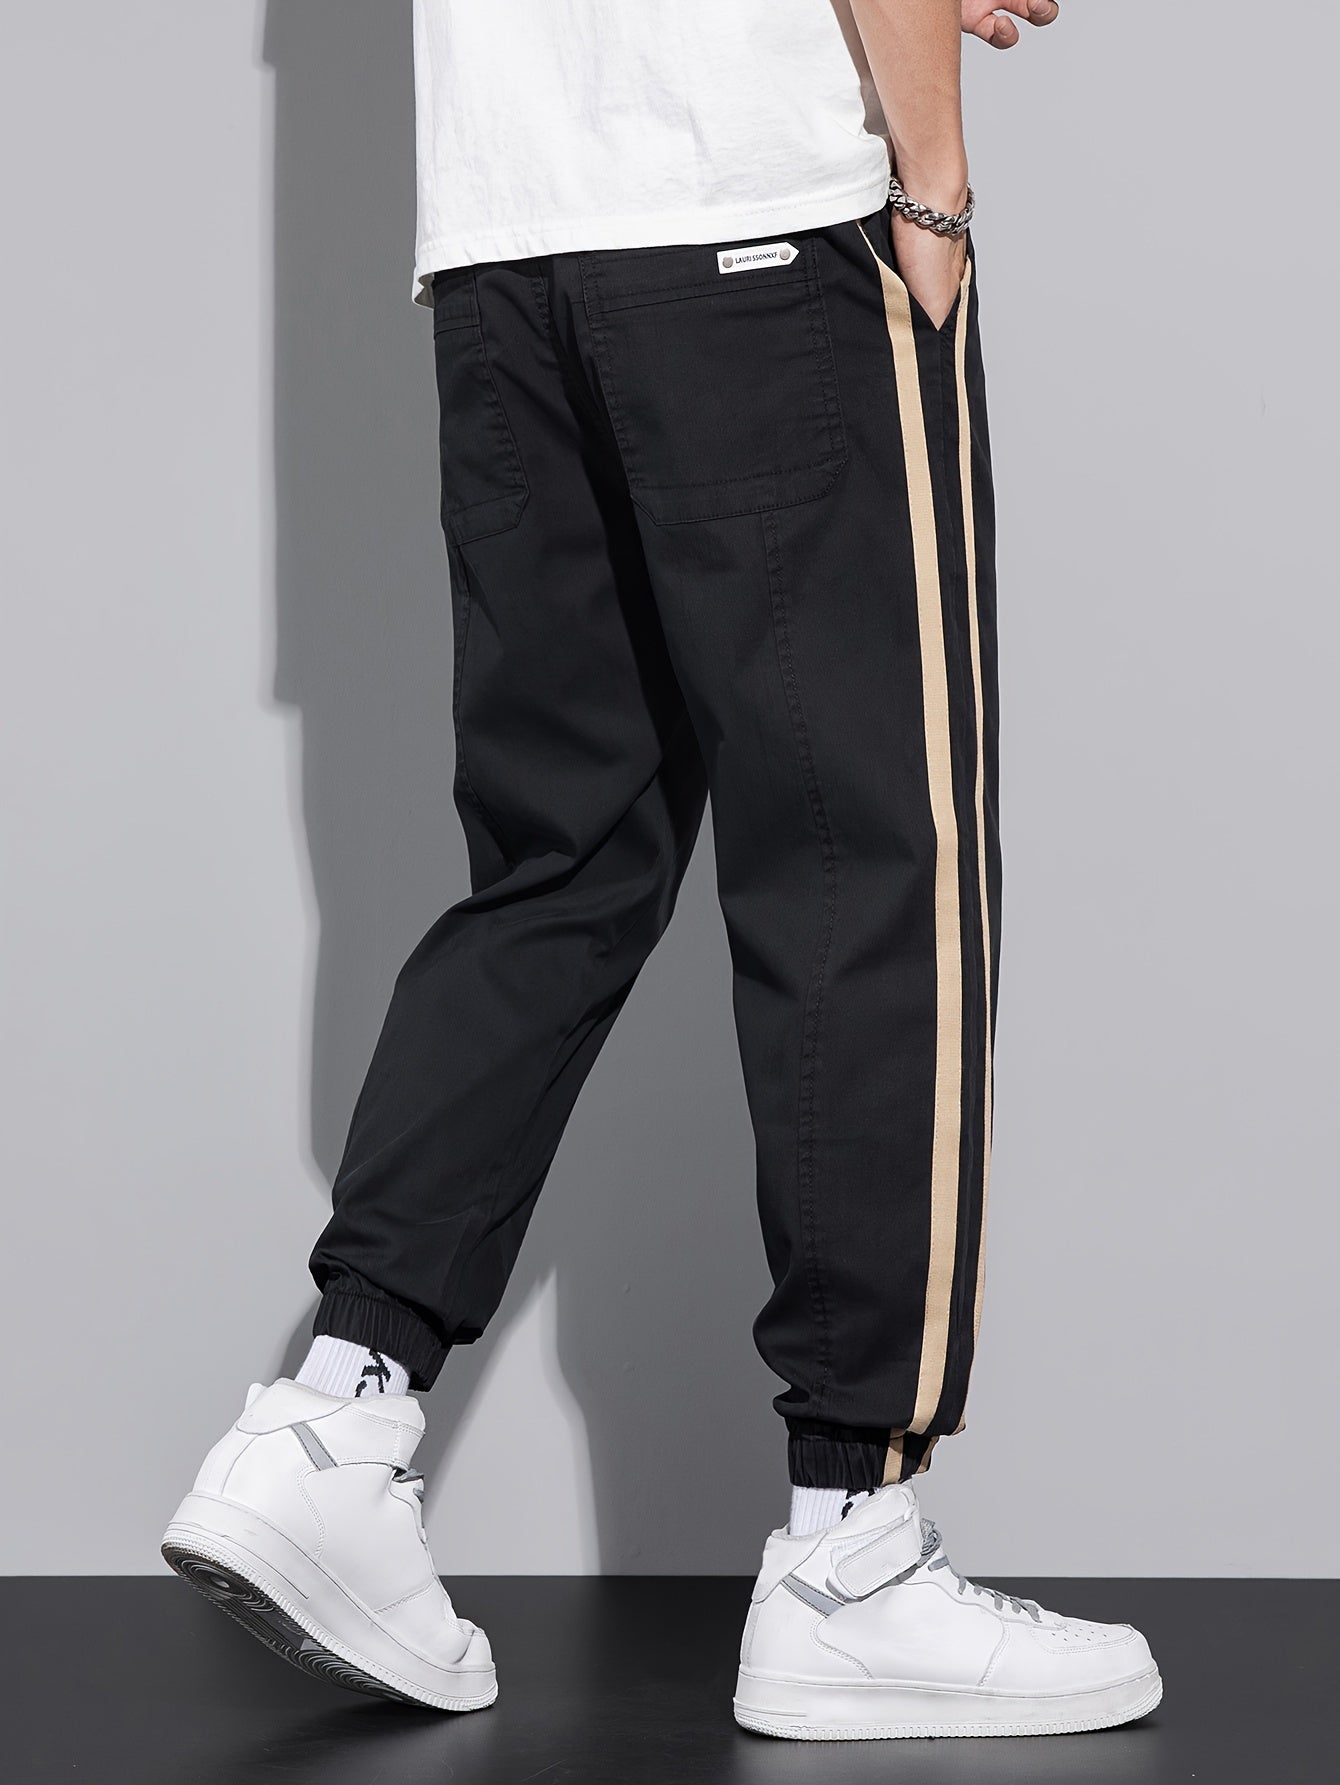 Adjustable Men's Jogger Pants - Comfort & Stylish Men's Joggers